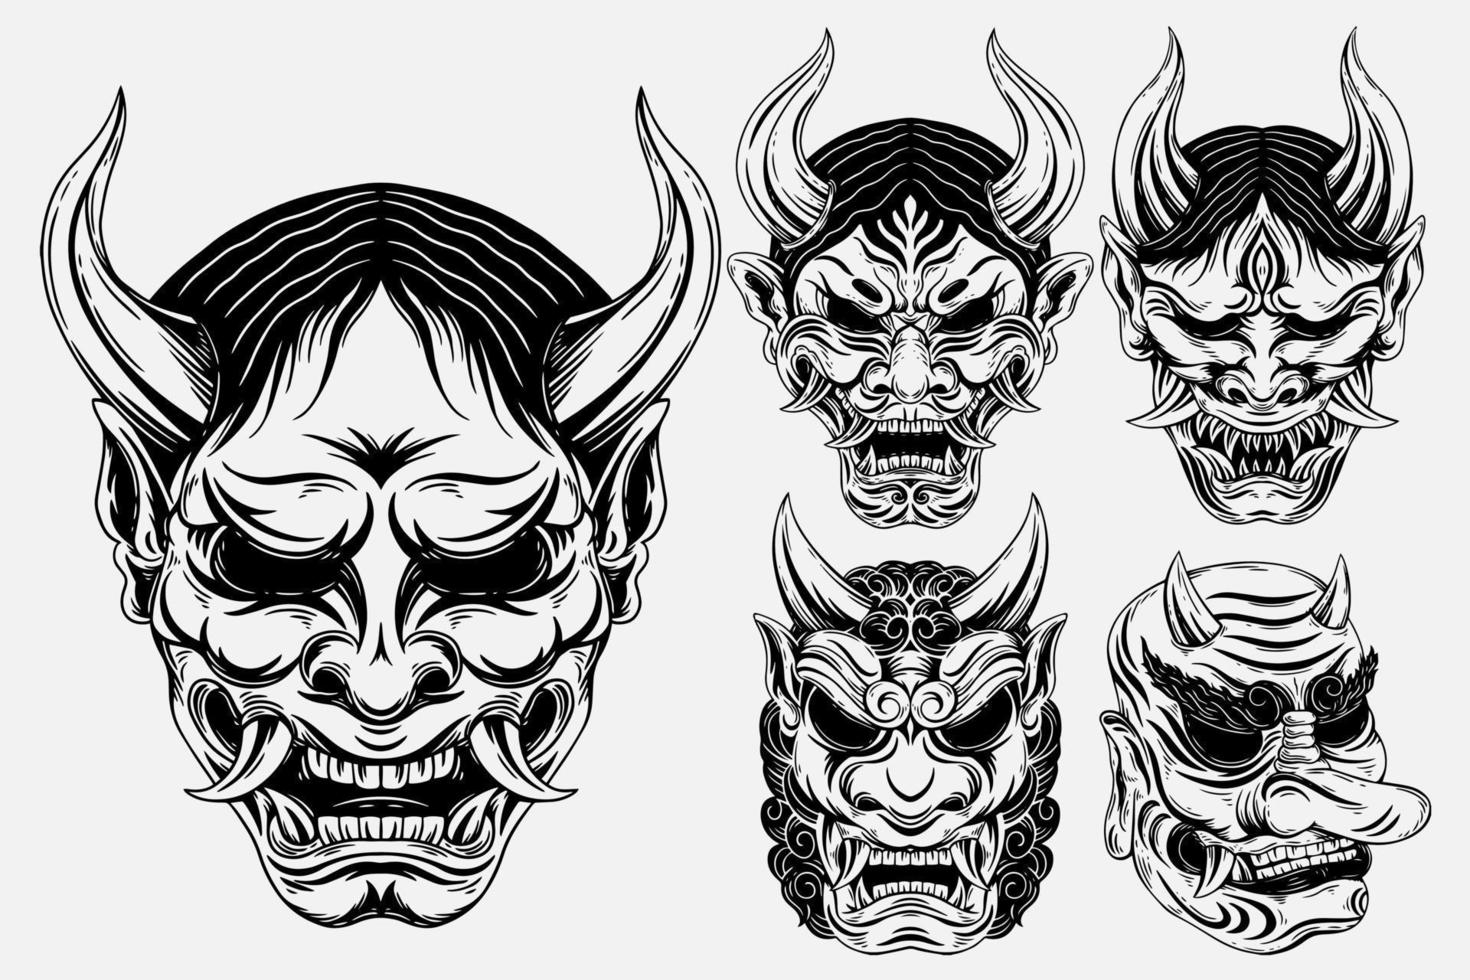 Set Bundle Dark Art Japanese Devil Oni Mask Tattoo Hand Drawn Engraving Style vector